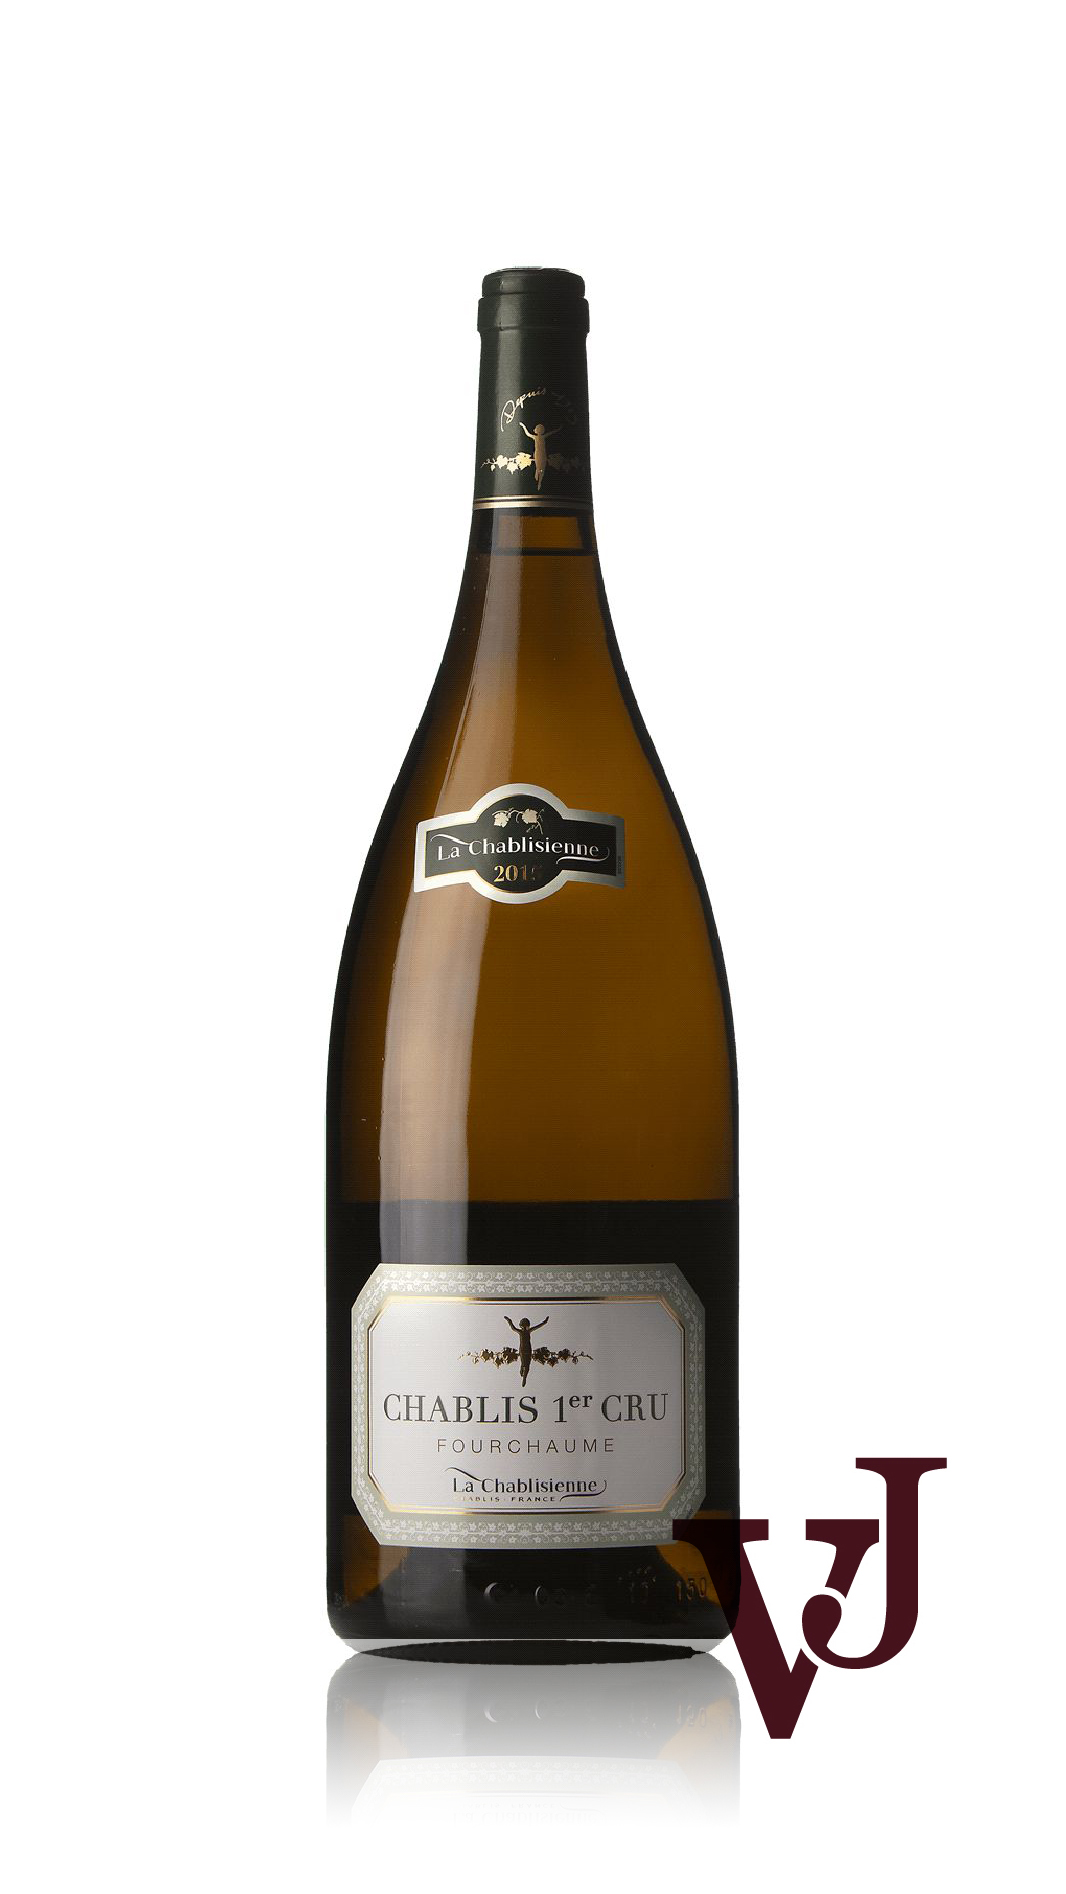 Vitt Vin - Chablis Premier Cru Fourchaume La Chablisienne 2015 artikel nummer 9254106 från producenten La Chablisienne från området Frankrike